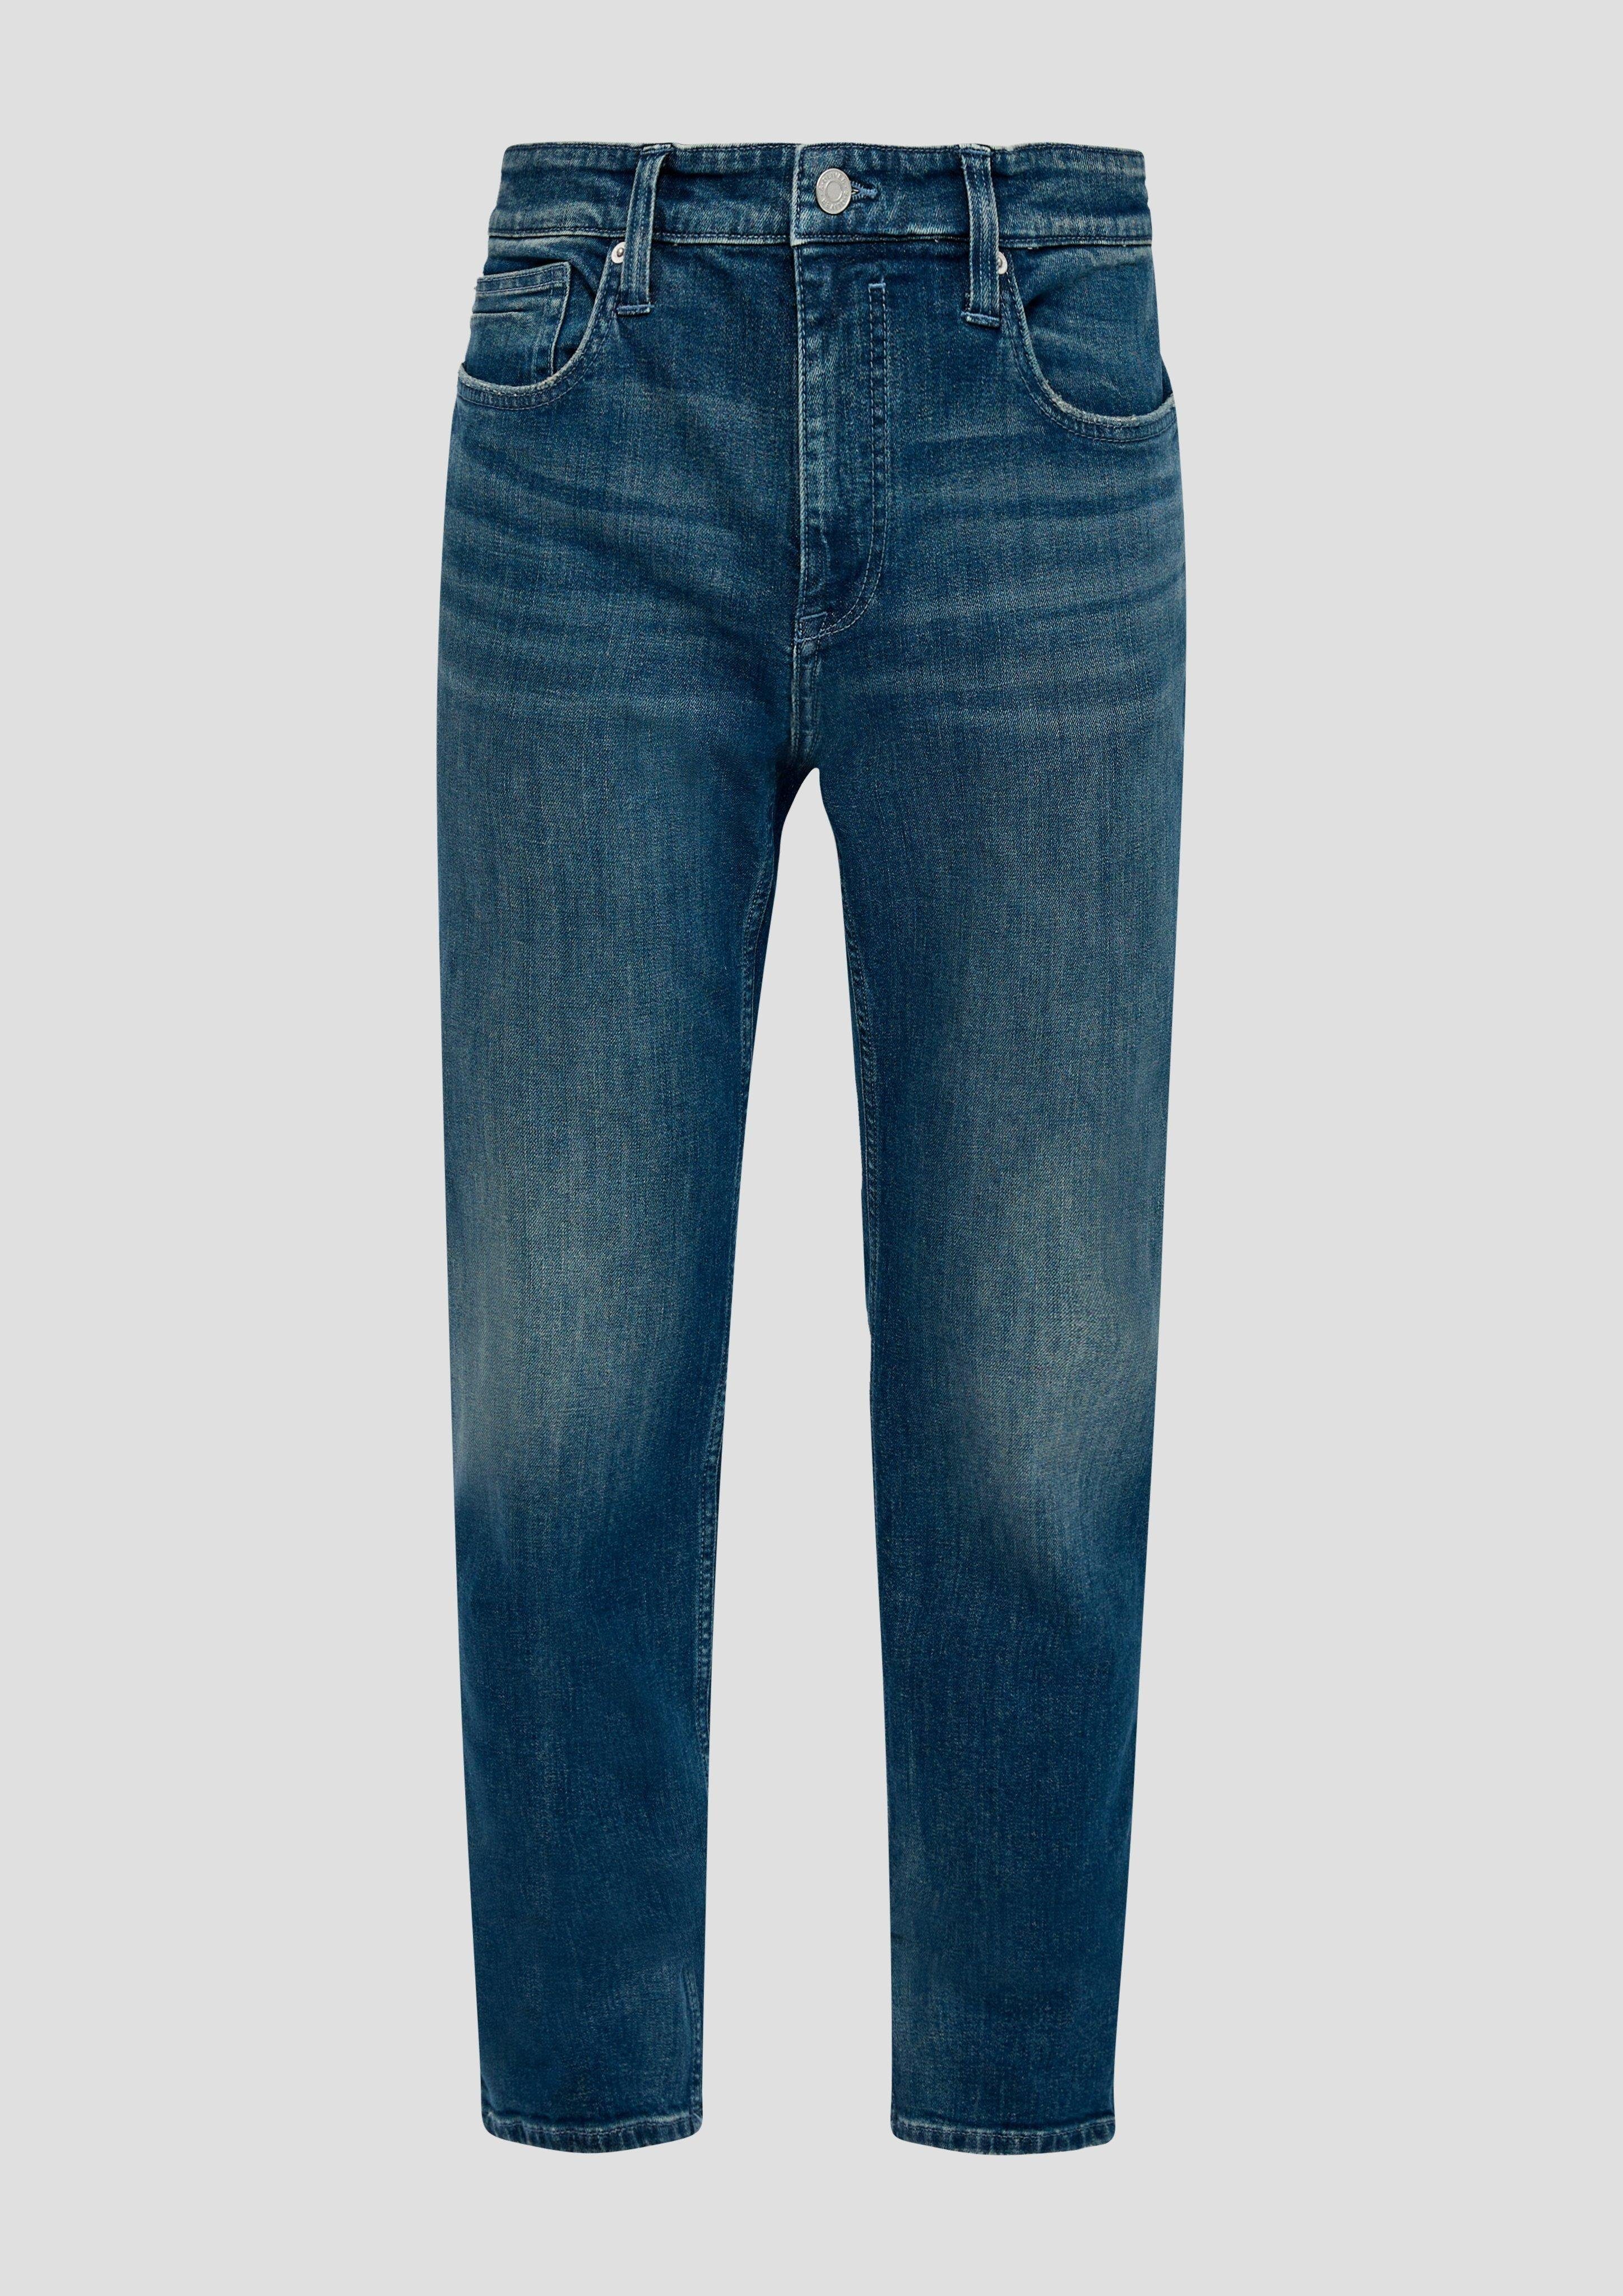 s.Oliver Stoffhose Jeans Nelio / Label-Patch Baumwollstretch dunkelblau Mid Leg Fit / Rise / / Slim Slim